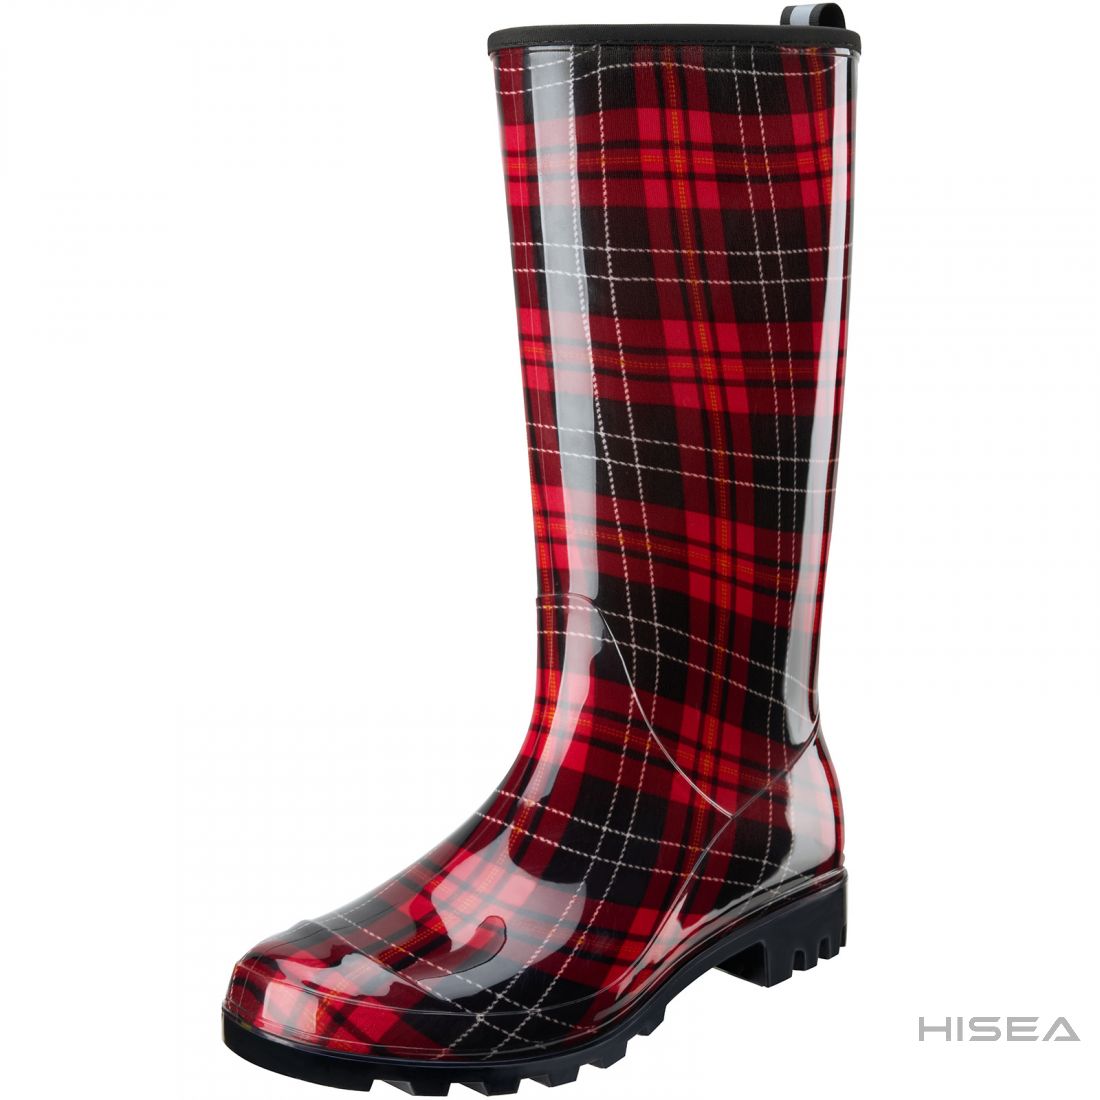 Women's Knee High Rain boots | HISEA